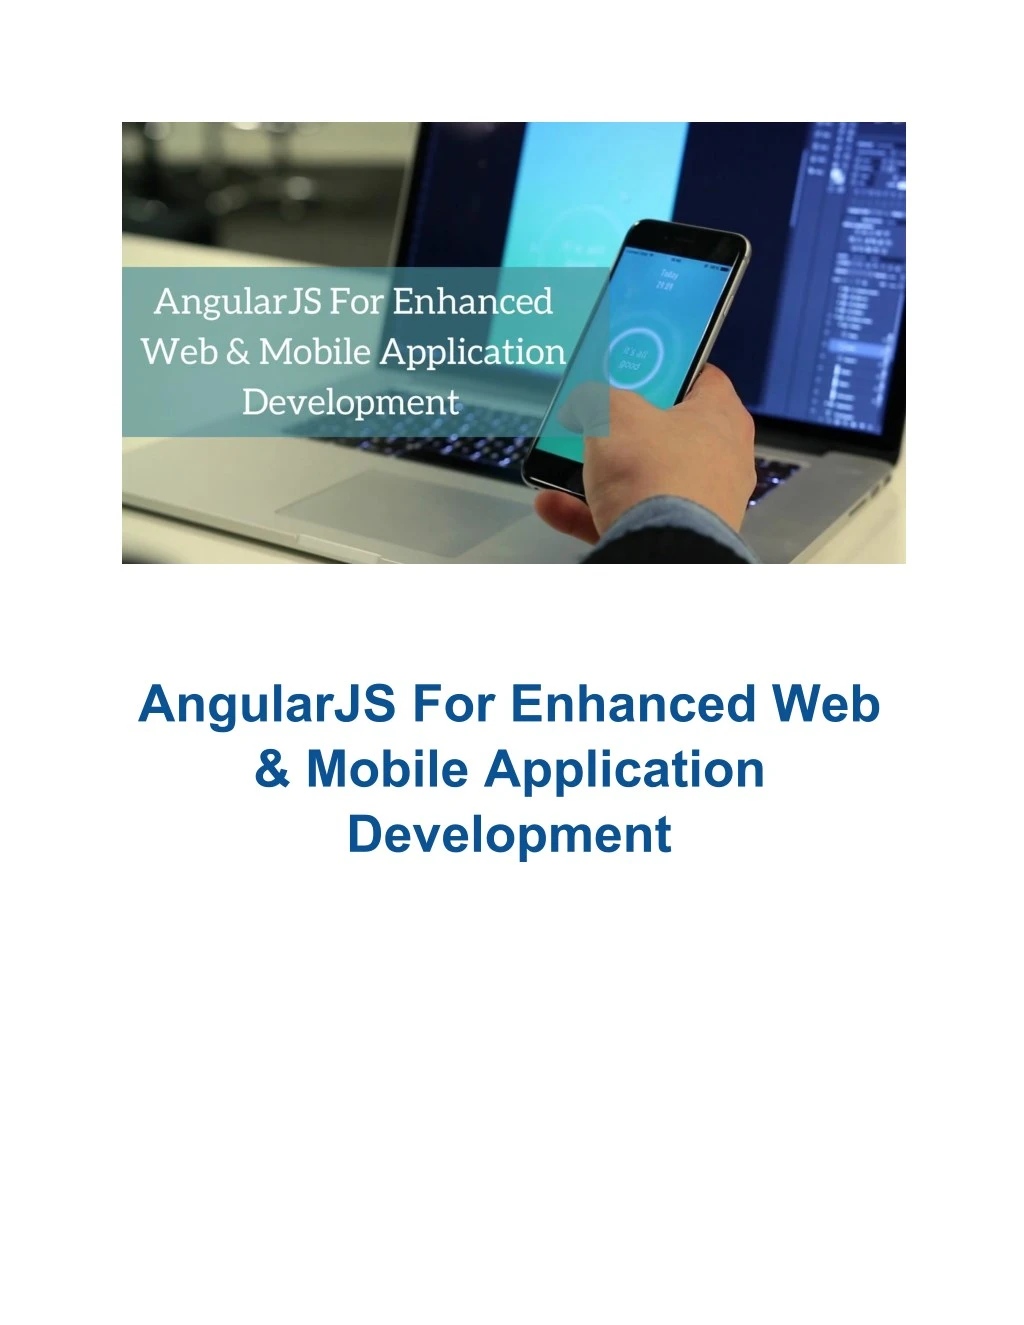 angularjs for enhanced web mobile application